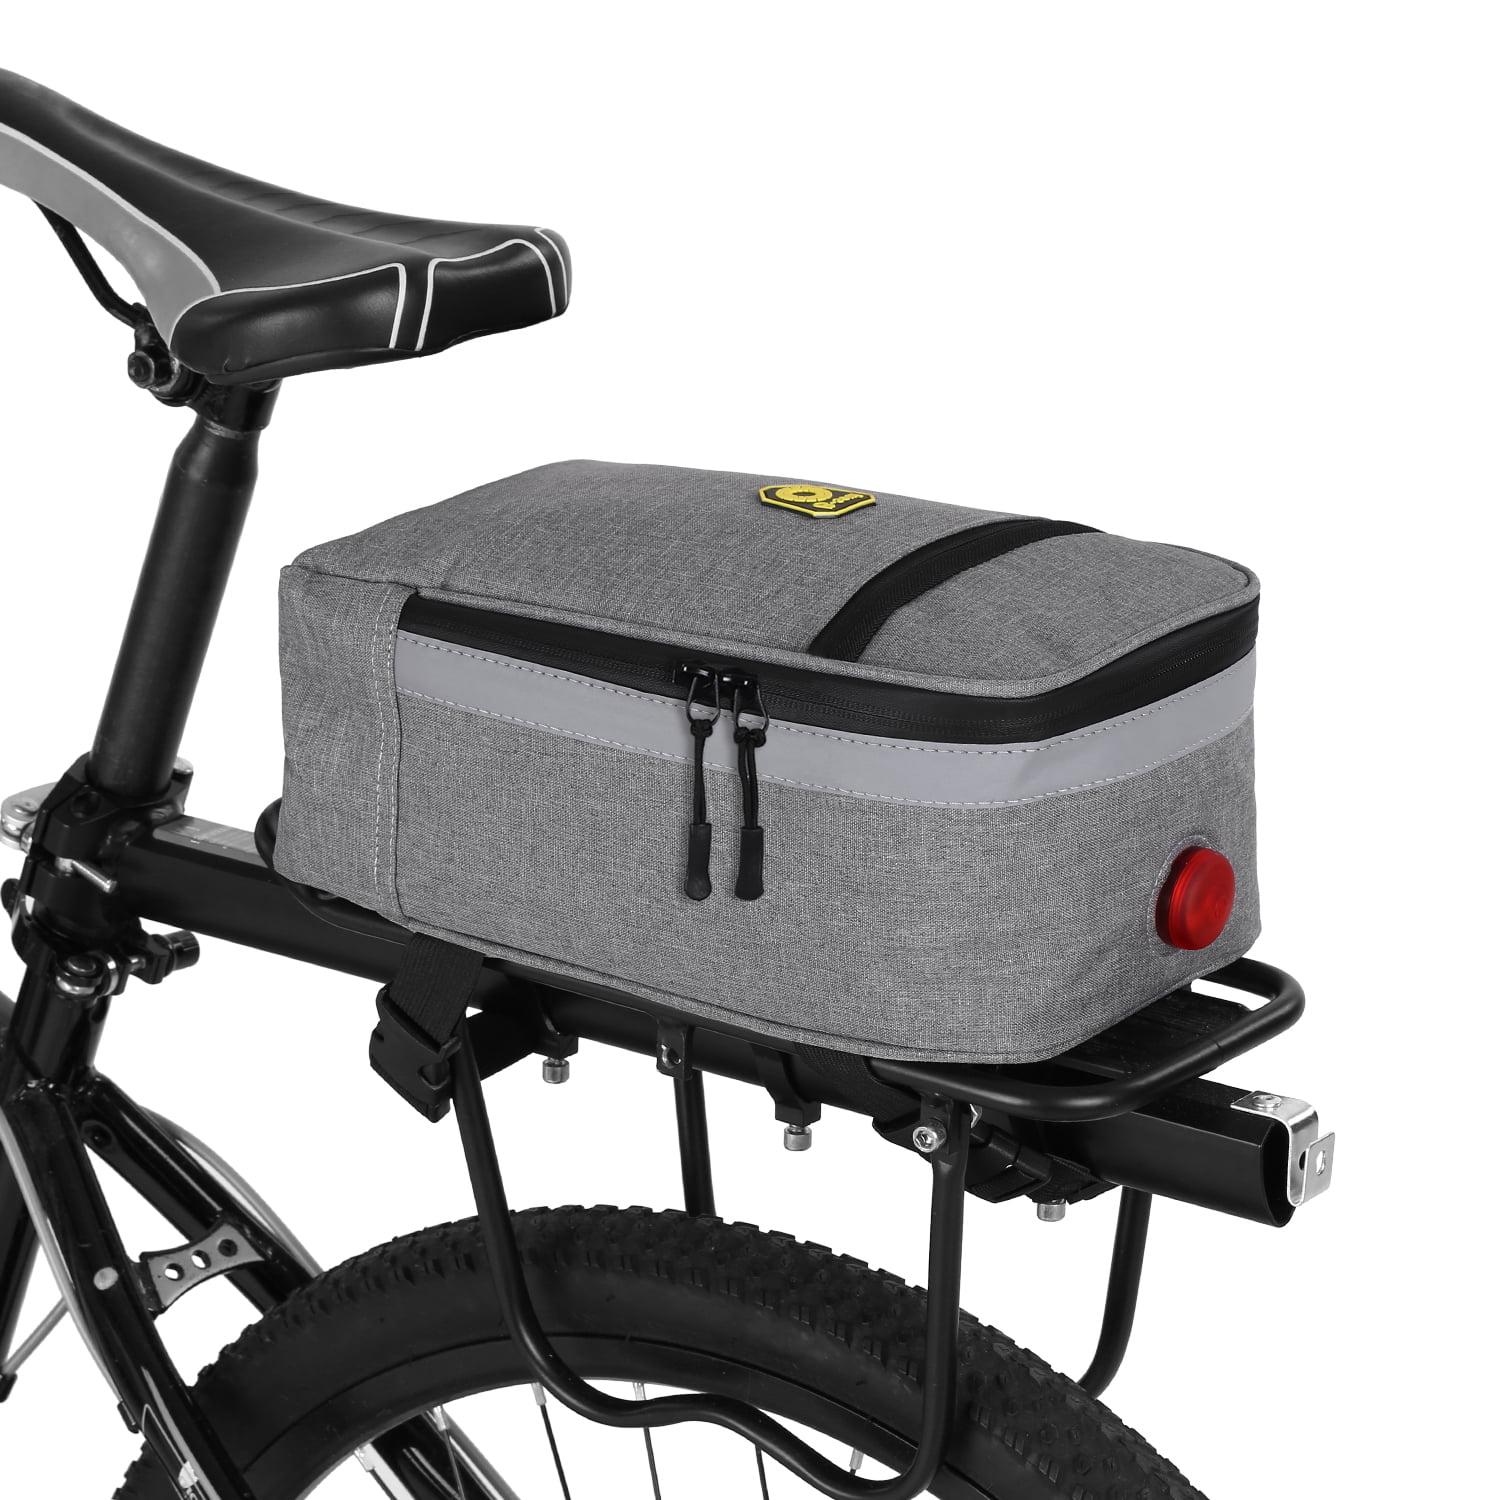 Waterproof Motorcycle Bicycle Riding Bag Luggage Storage Shoulder Tail Seat Bag 